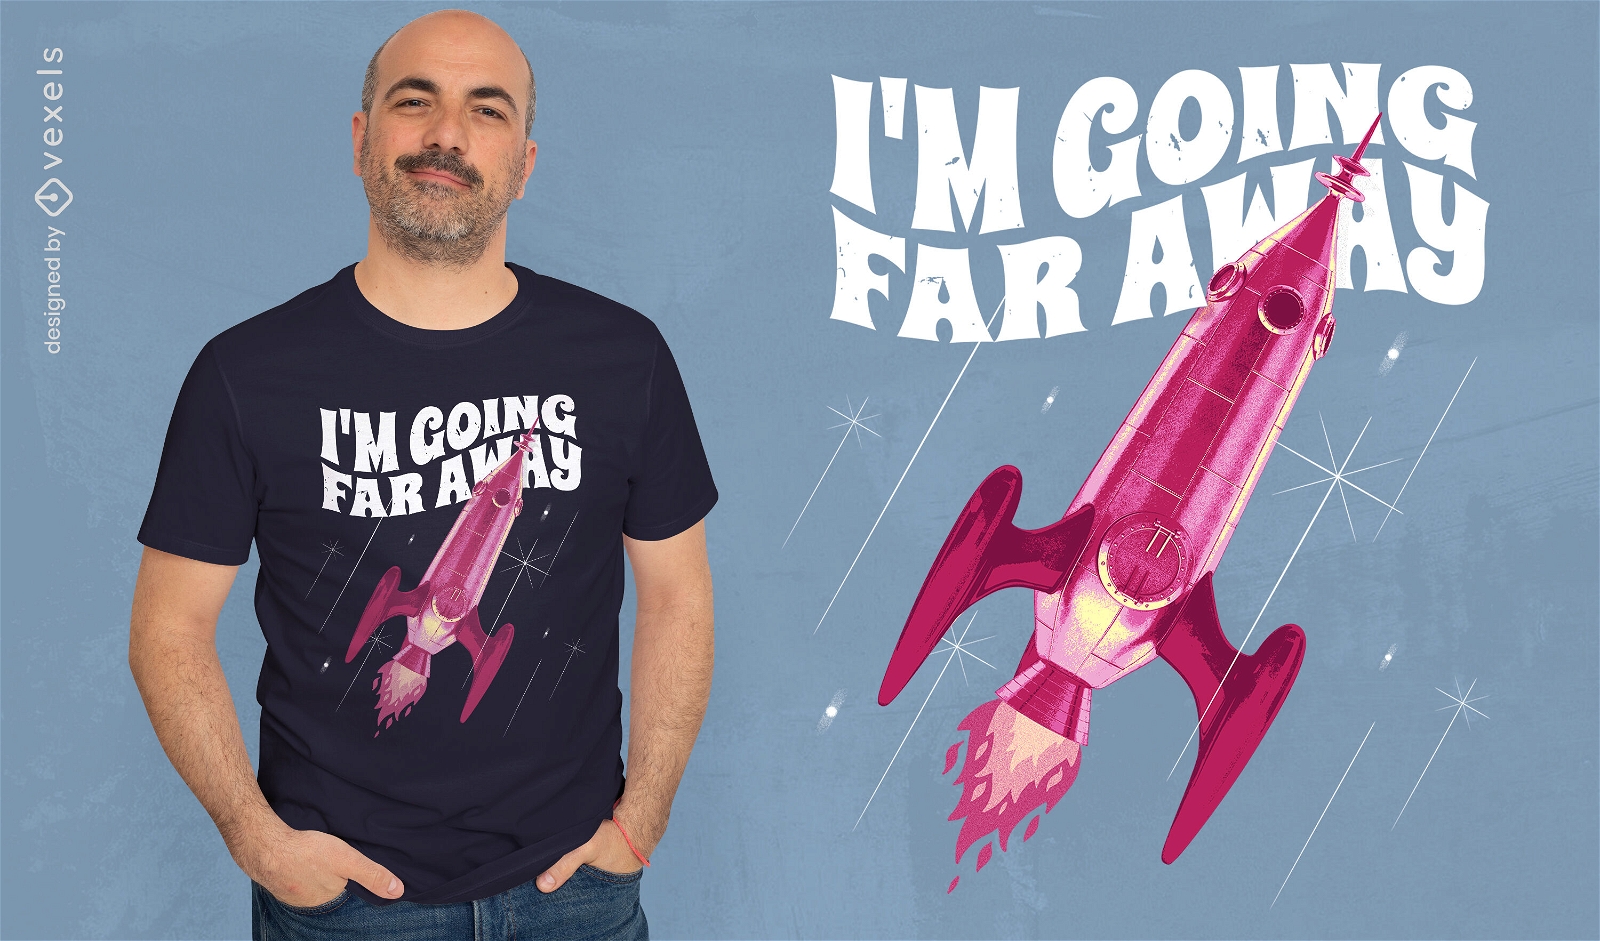 Raketenreise-Zitat-T-Shirt-Design